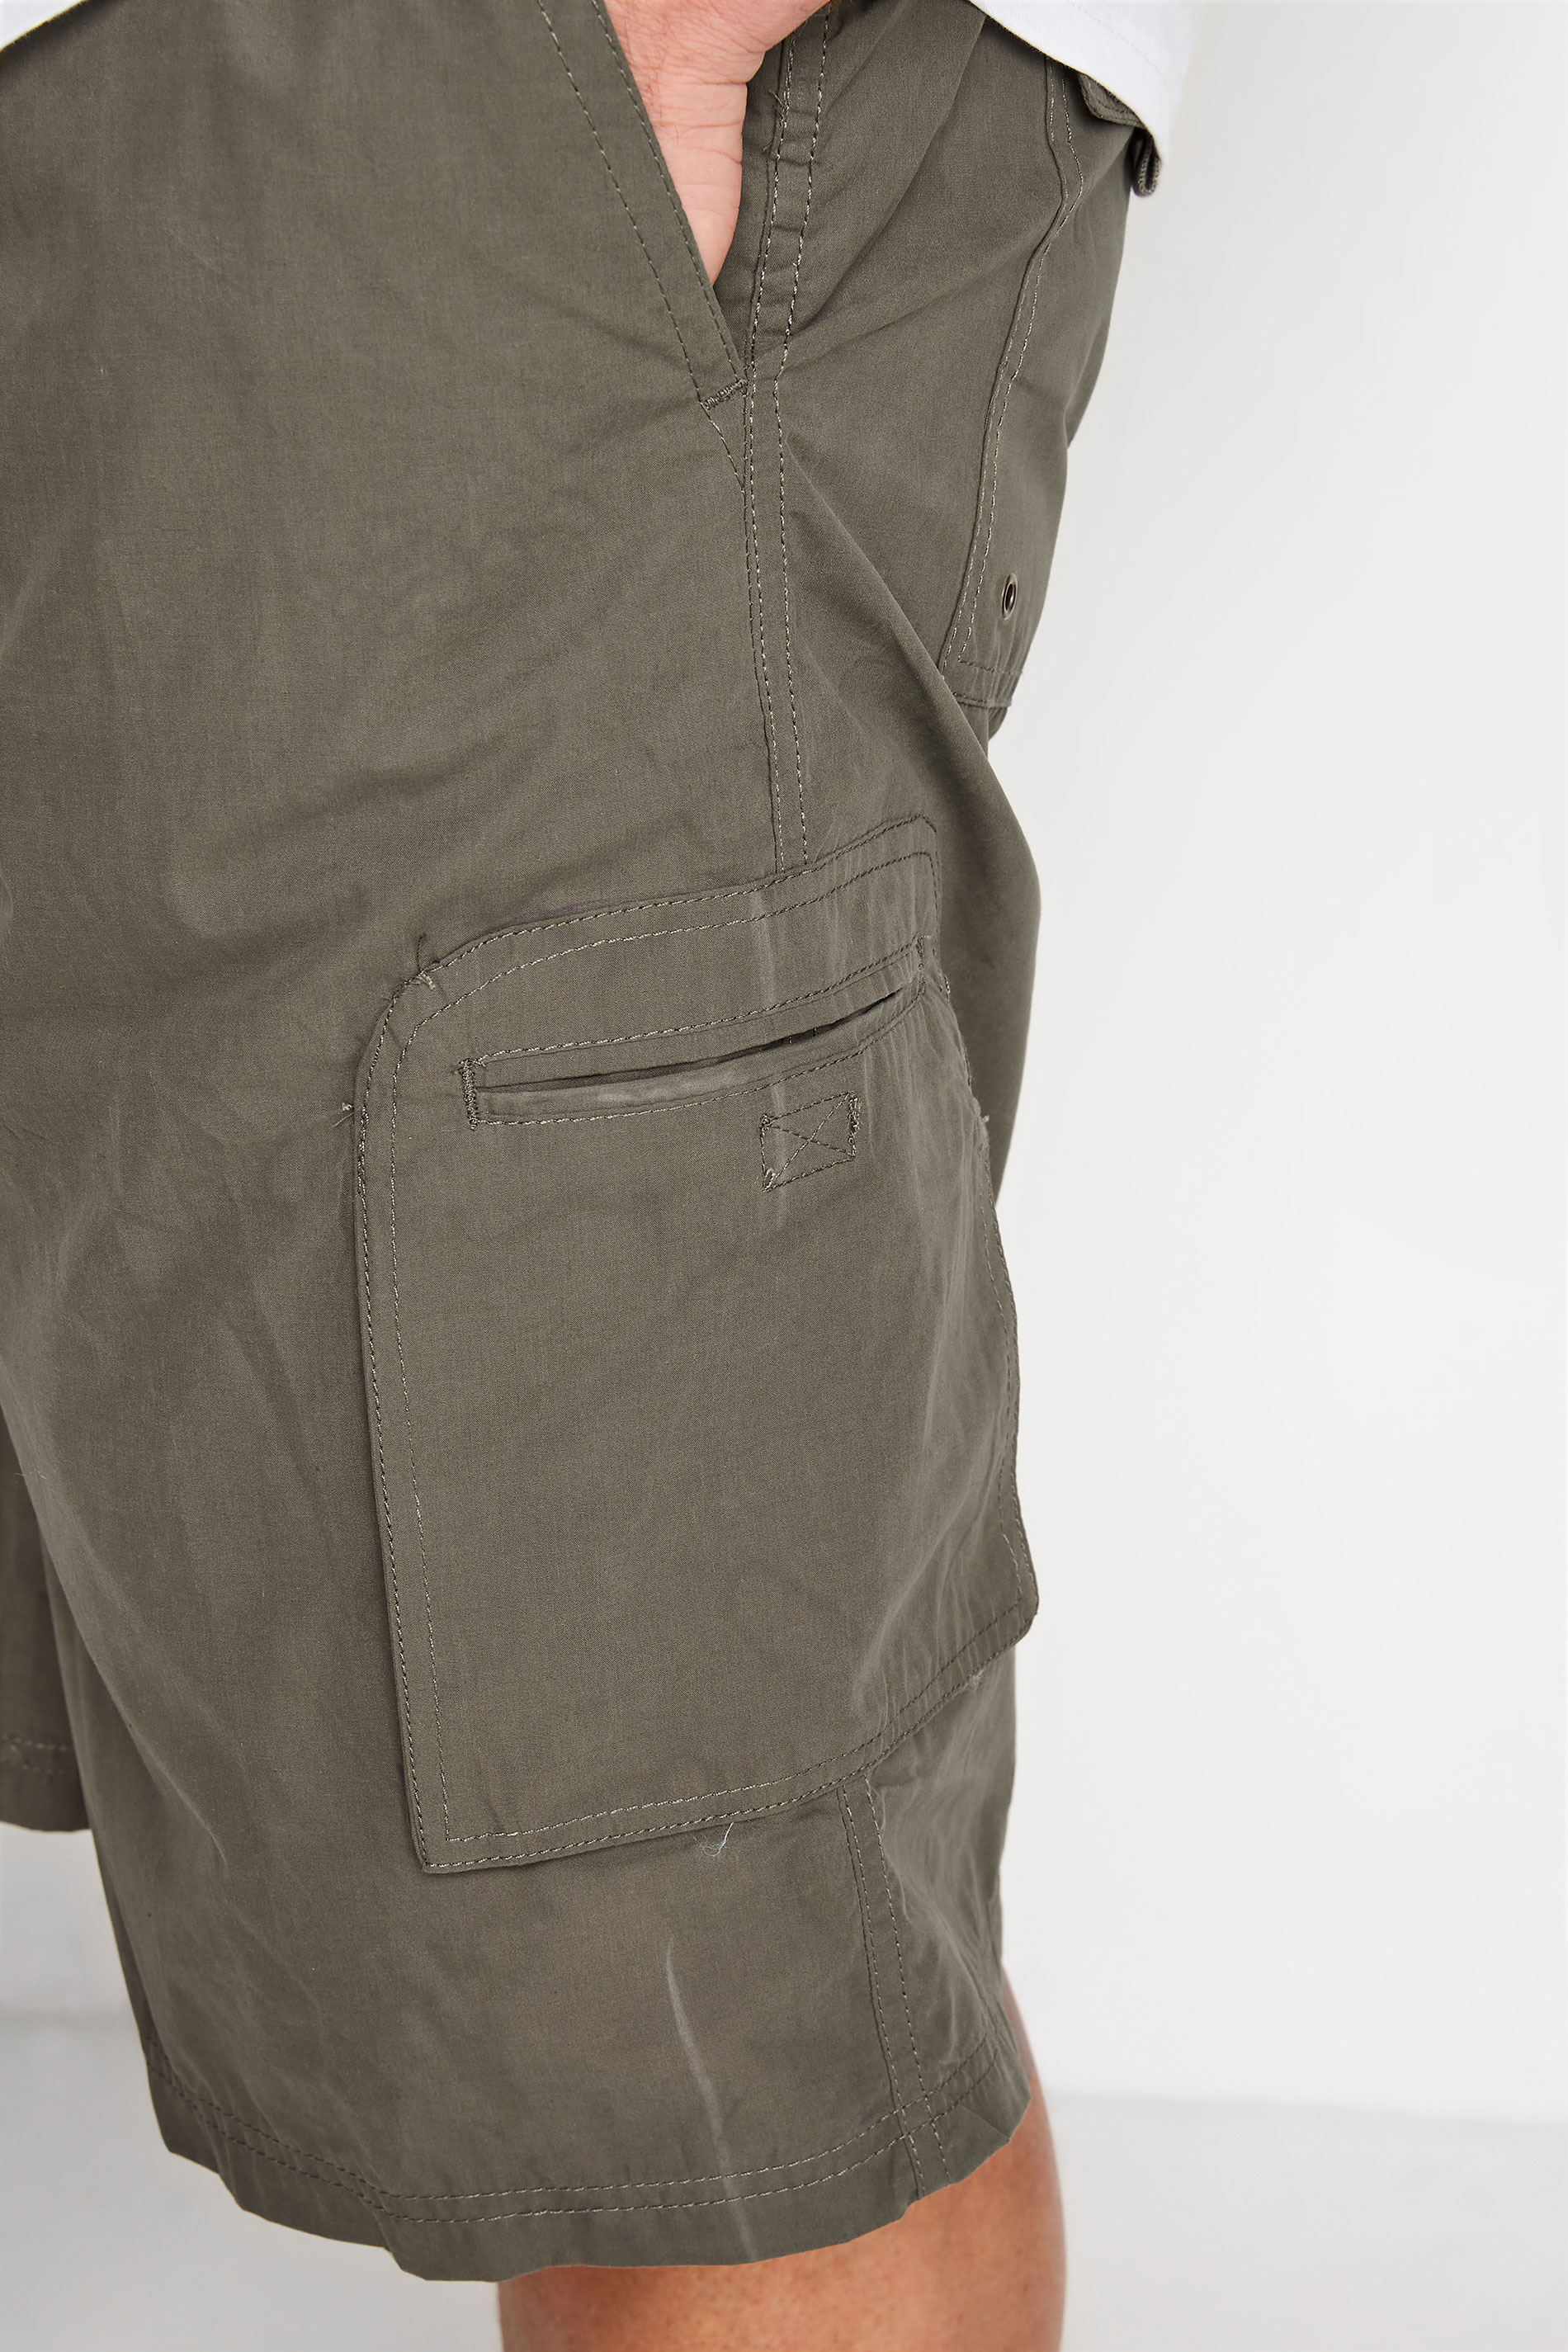 D555 Khaki Green Cargo Shorts | BadRhino 3